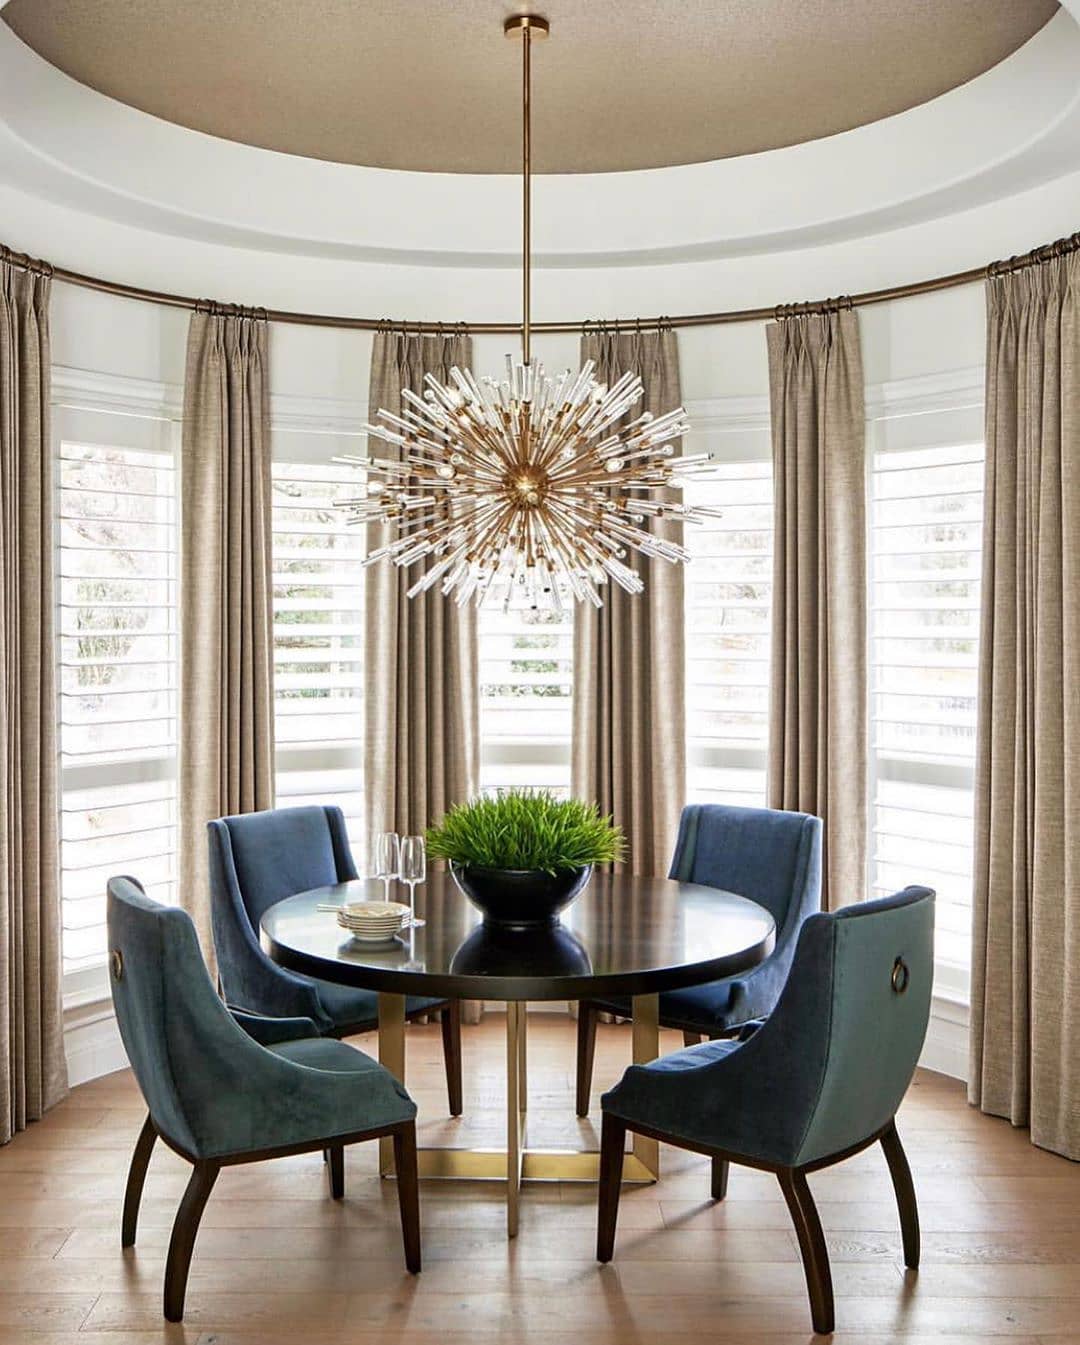 Luxury dining room/breakfast nook. Photo by Instagram user @decoraalover